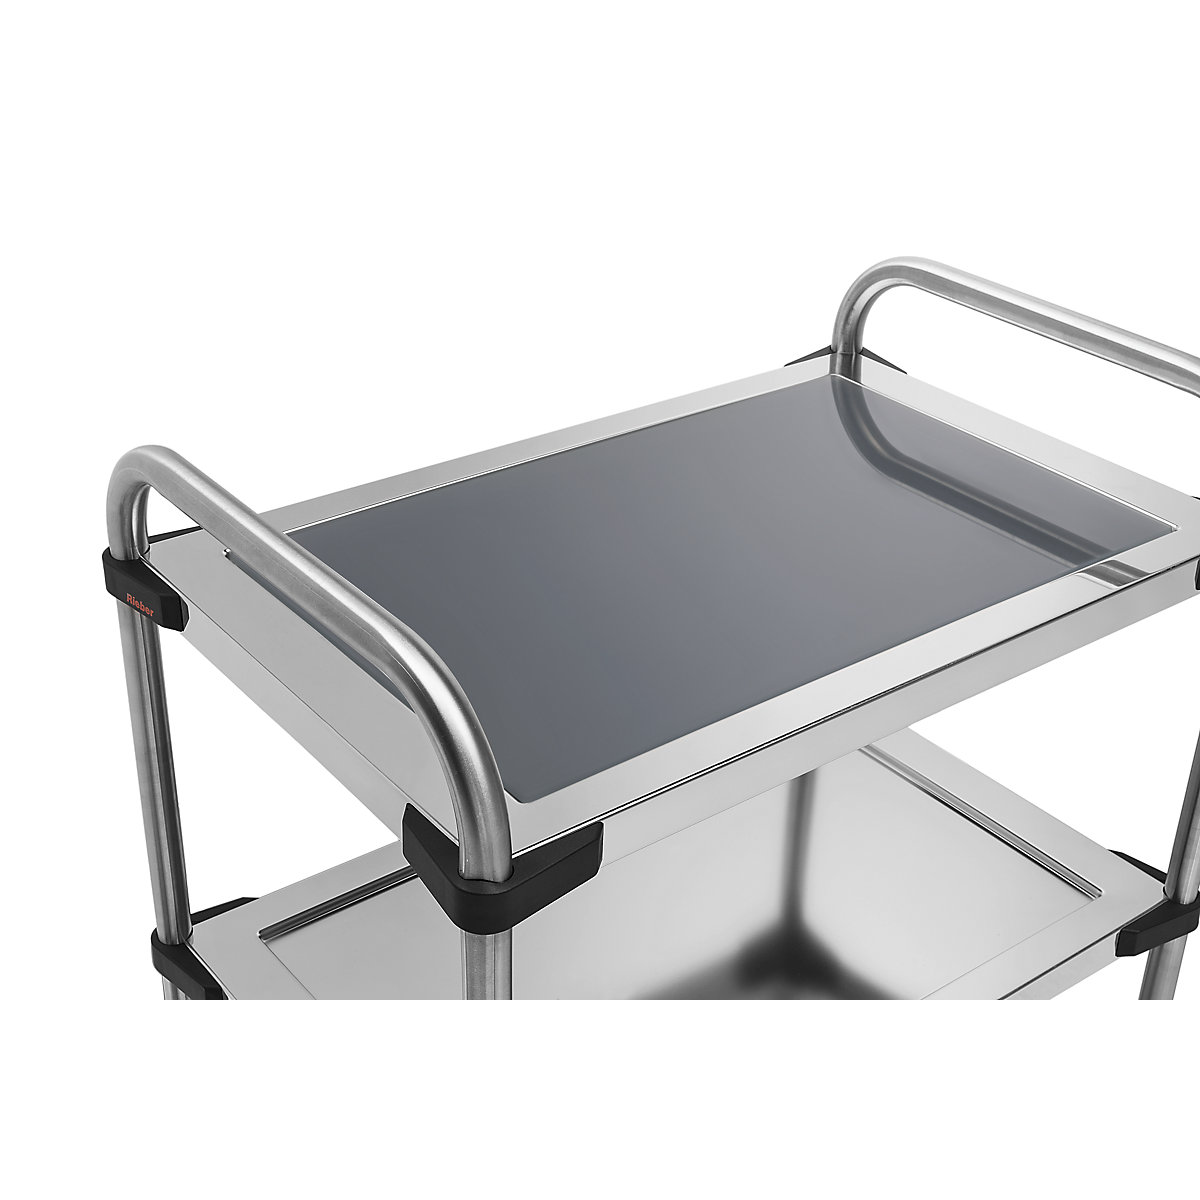 Shelf for 640-RL stainless steel serving trolley